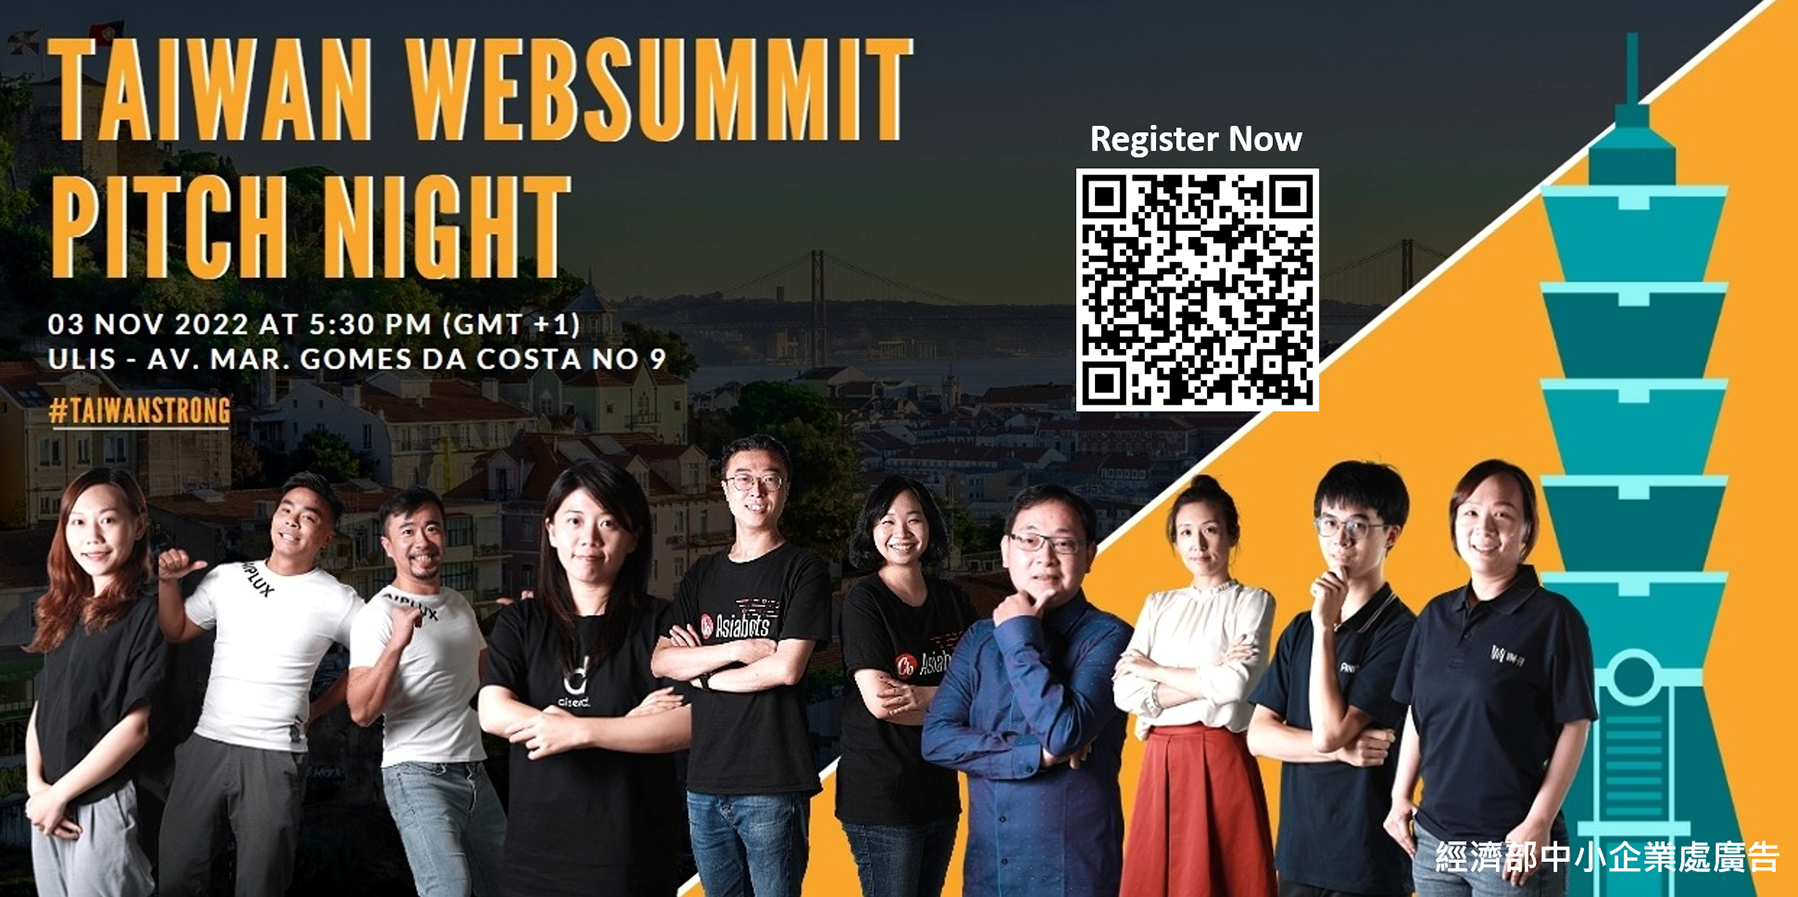 8 startups revolucionarias taiwanesas se dirigen al Web Summit 2022